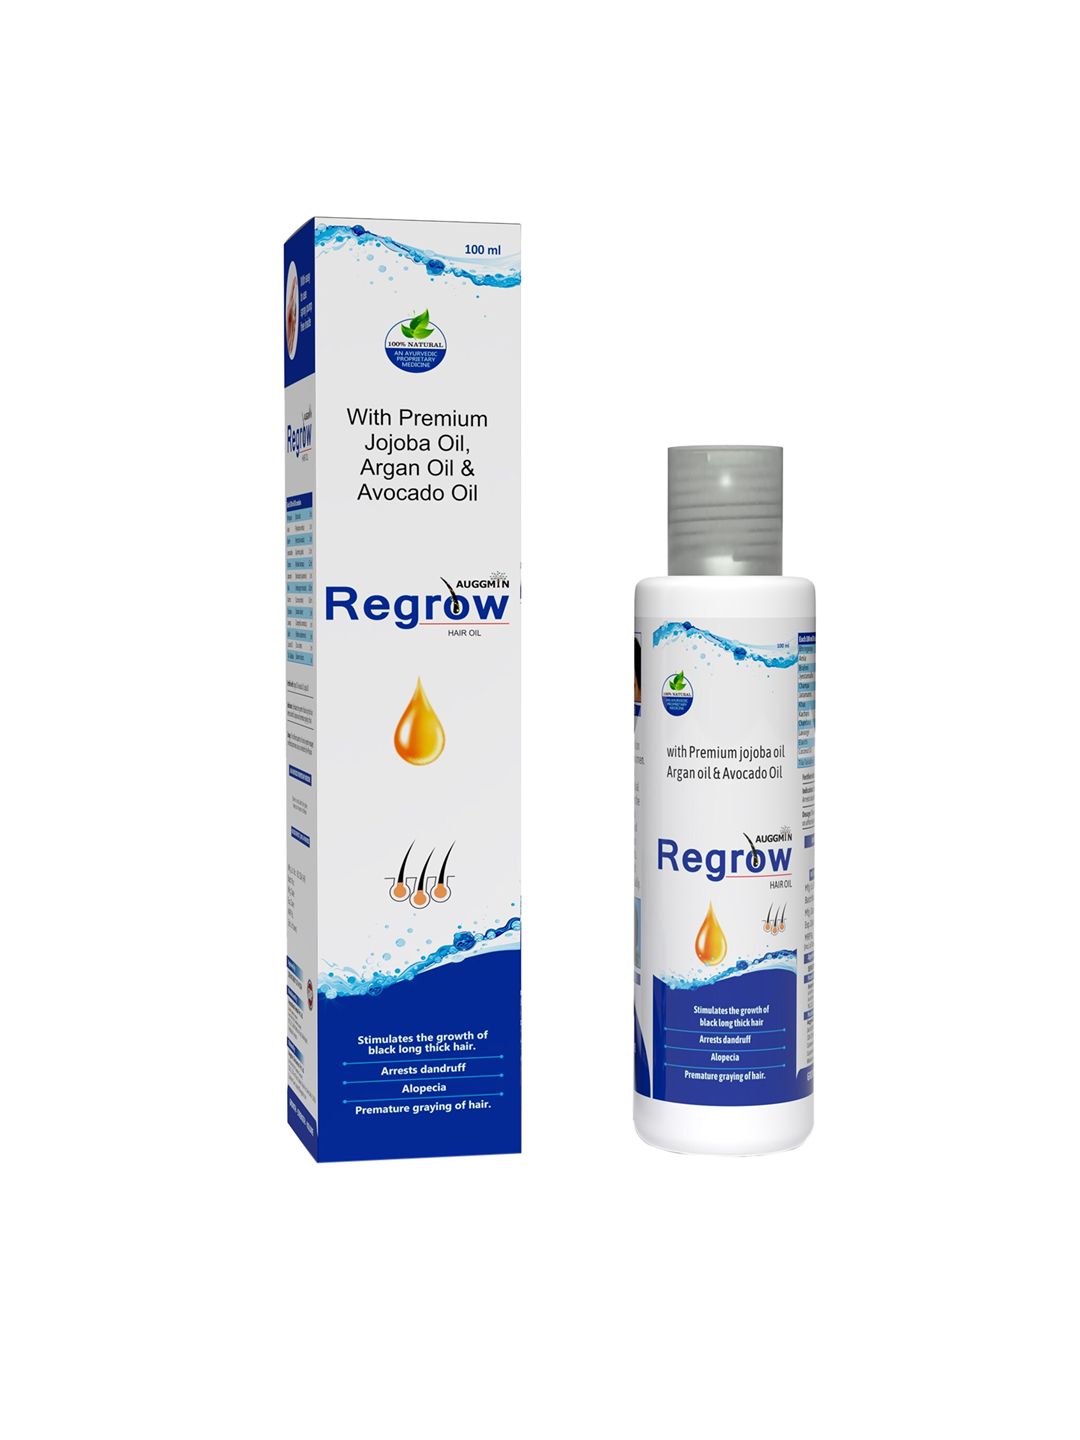 Auggmin Regrow Hair Oil 100 ml Price in India